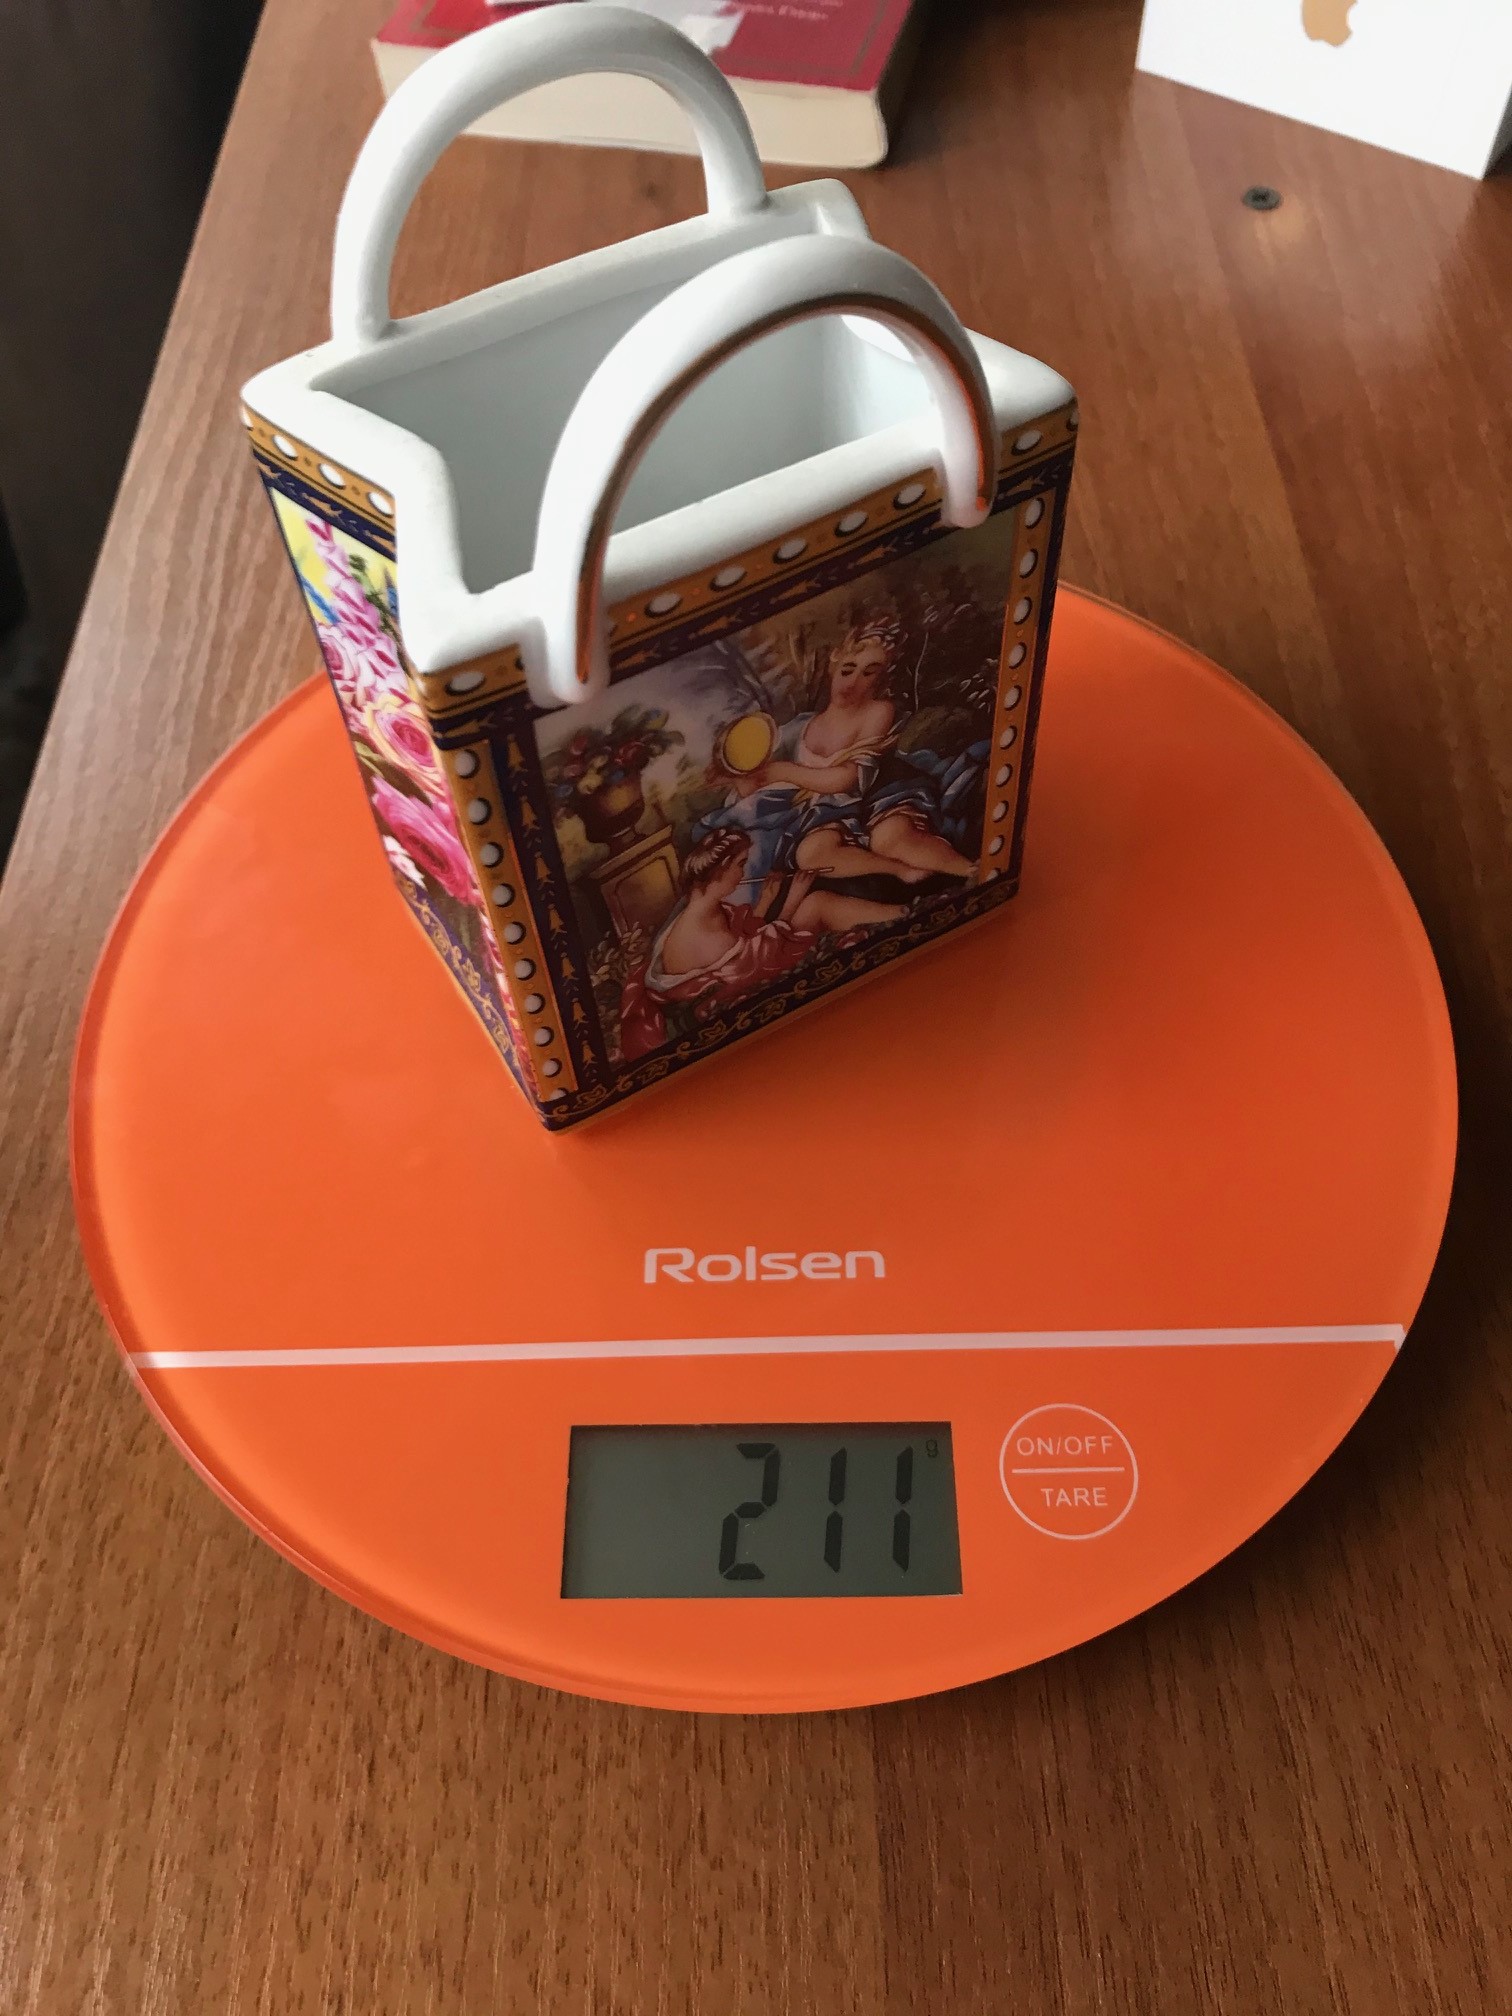 weight of a ceramic napkin holder